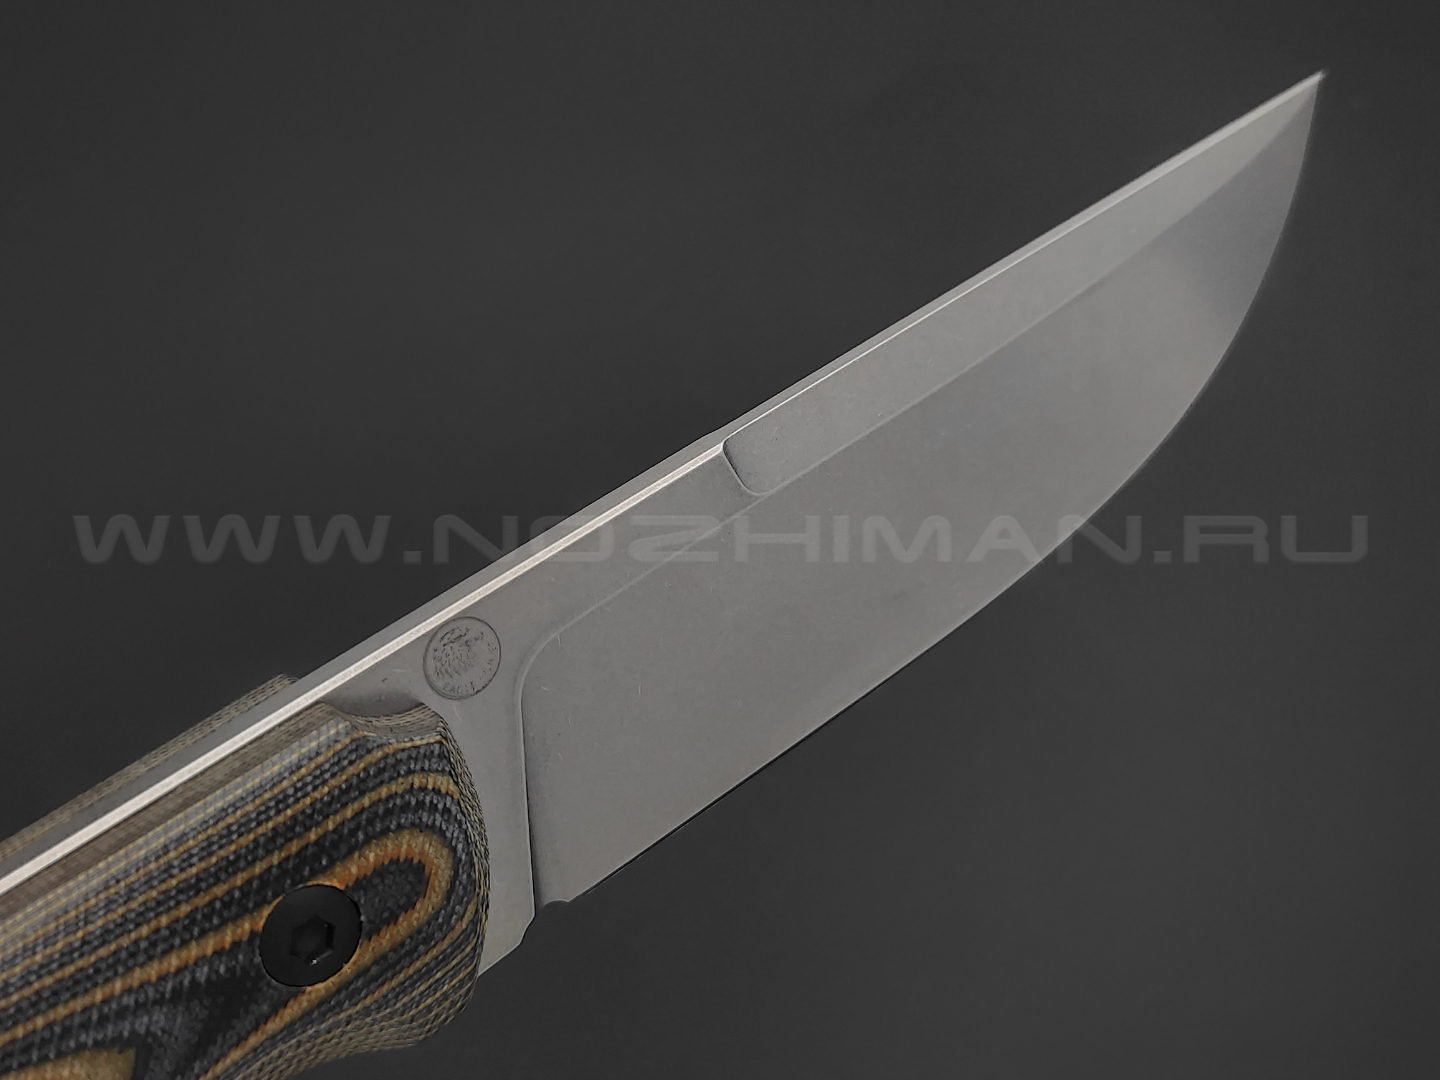 Eagle Knives нож Fisher 2 сталь Aus10Co stonewash, рукоять G10 black & orange